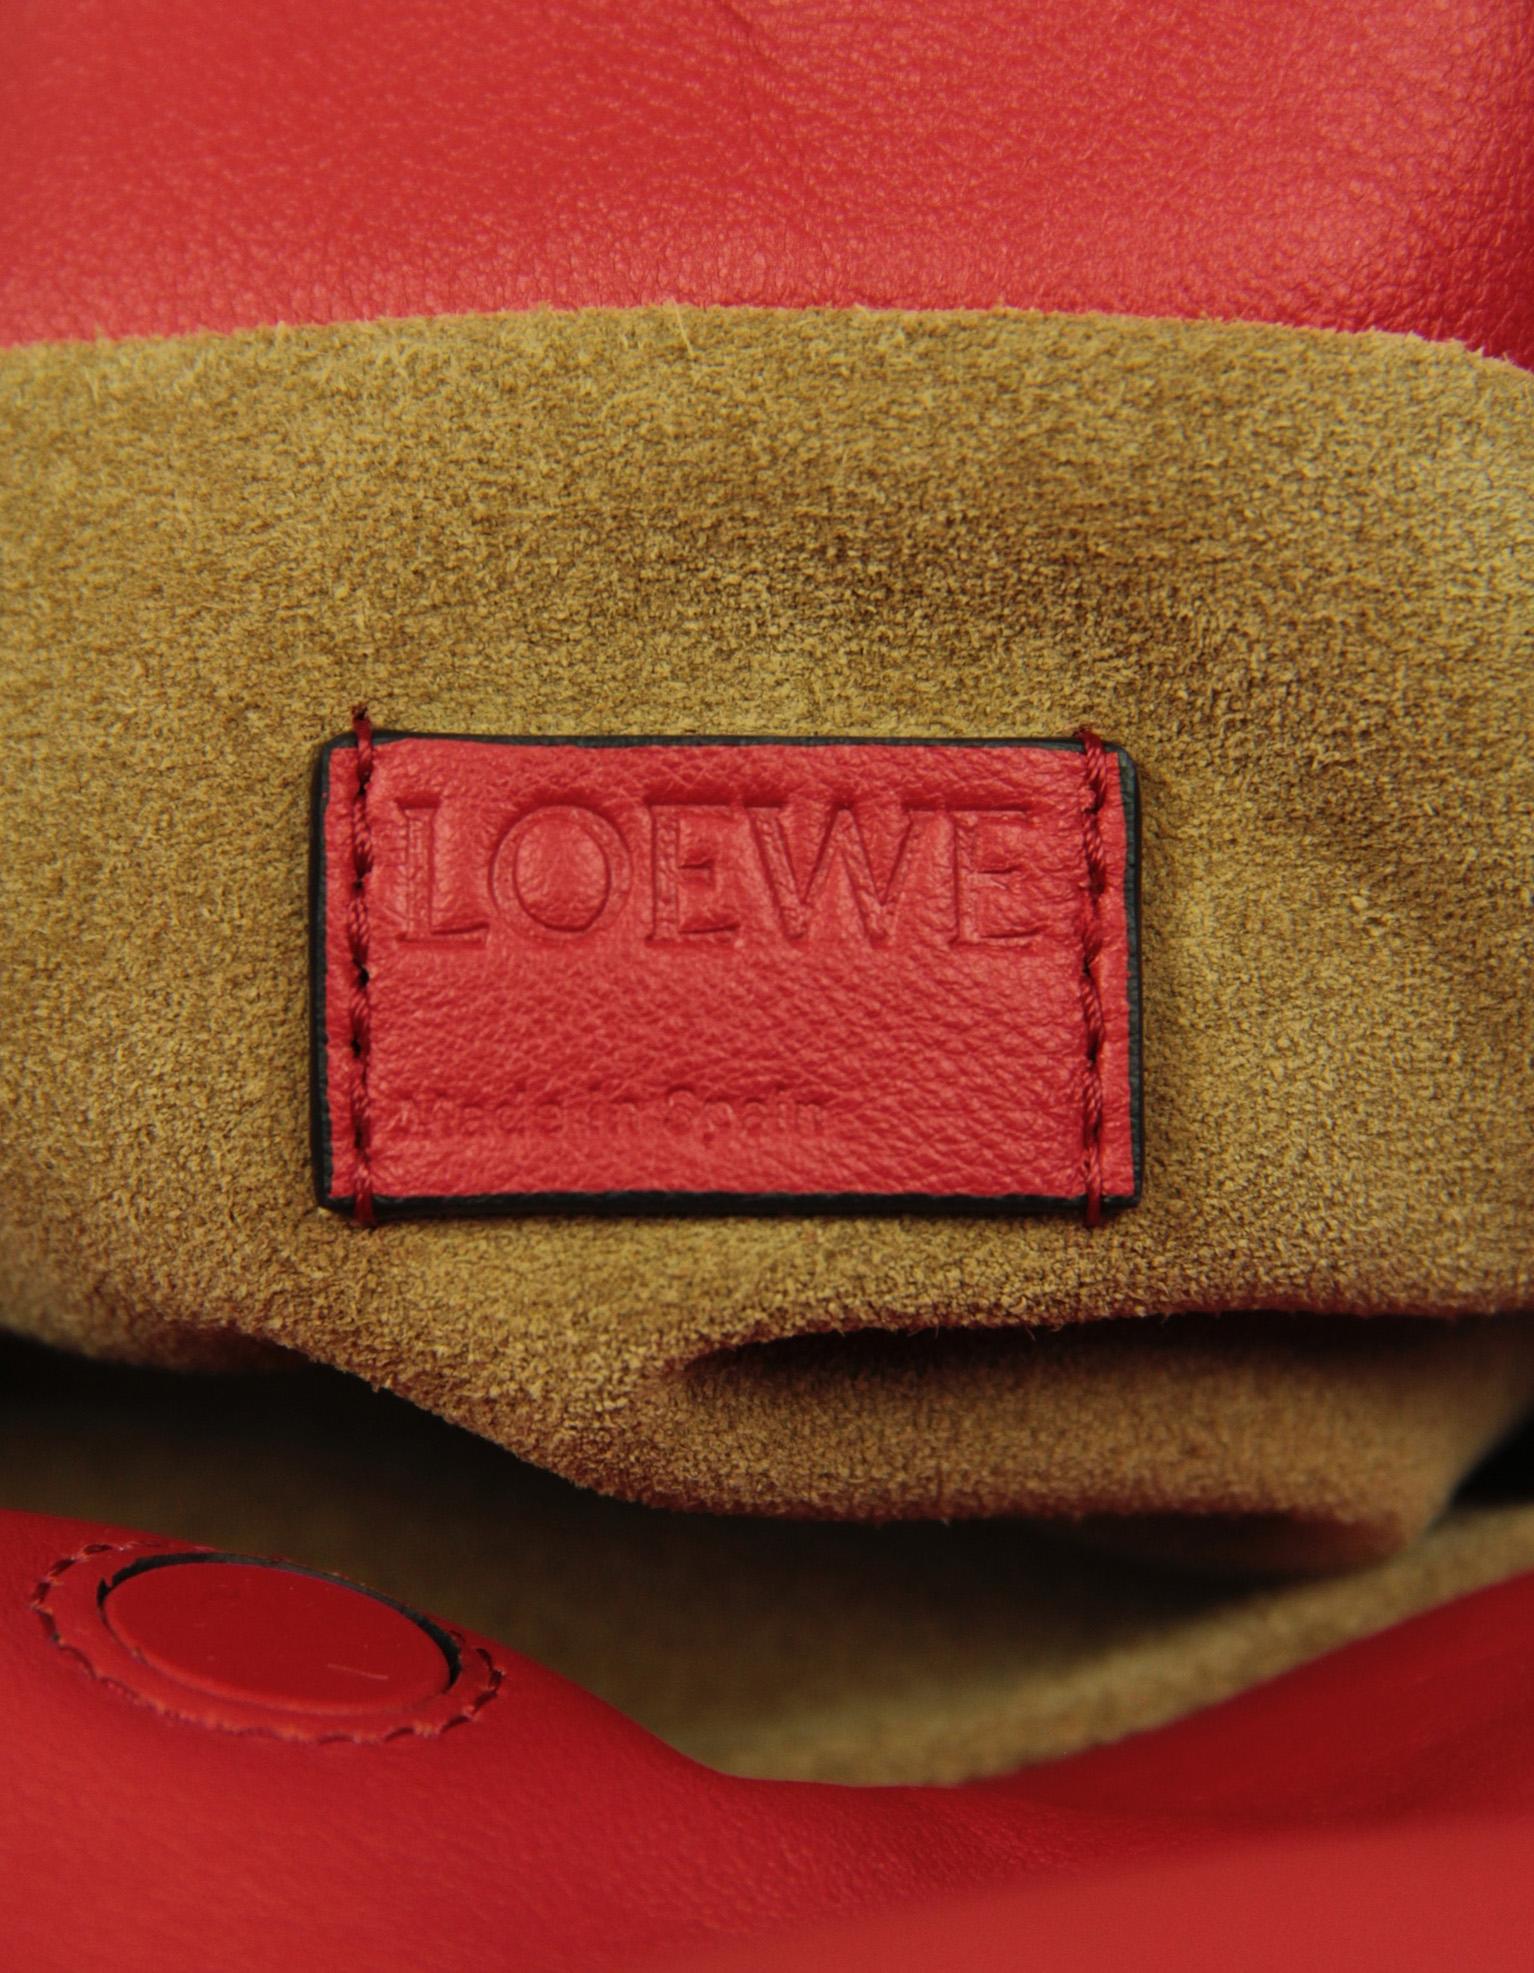 Loewe Red Calfskin Leather Flamenco Bag w/ Donut Chain For Sale 3